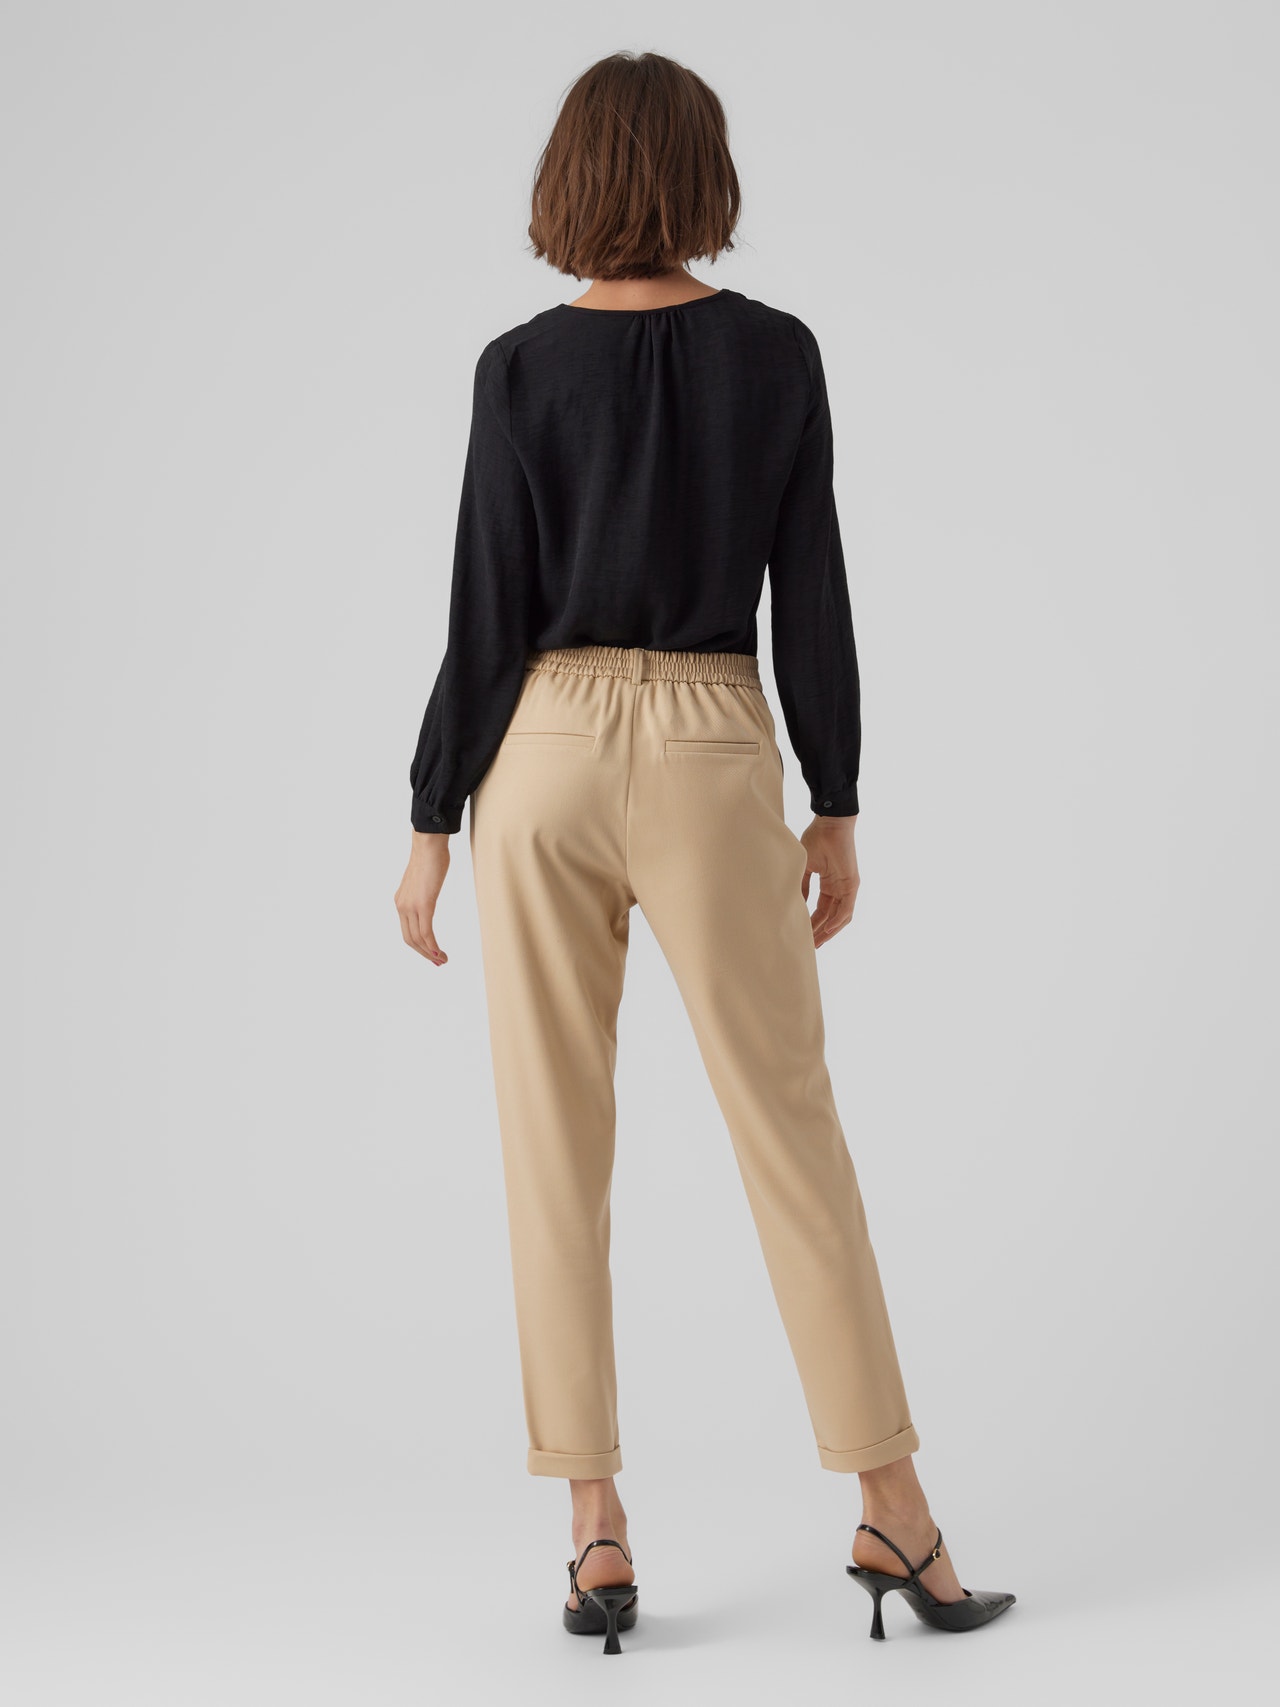 Vero Moda VMMAYA Taille moyenne Pantalons -Irish Cream - 10225280